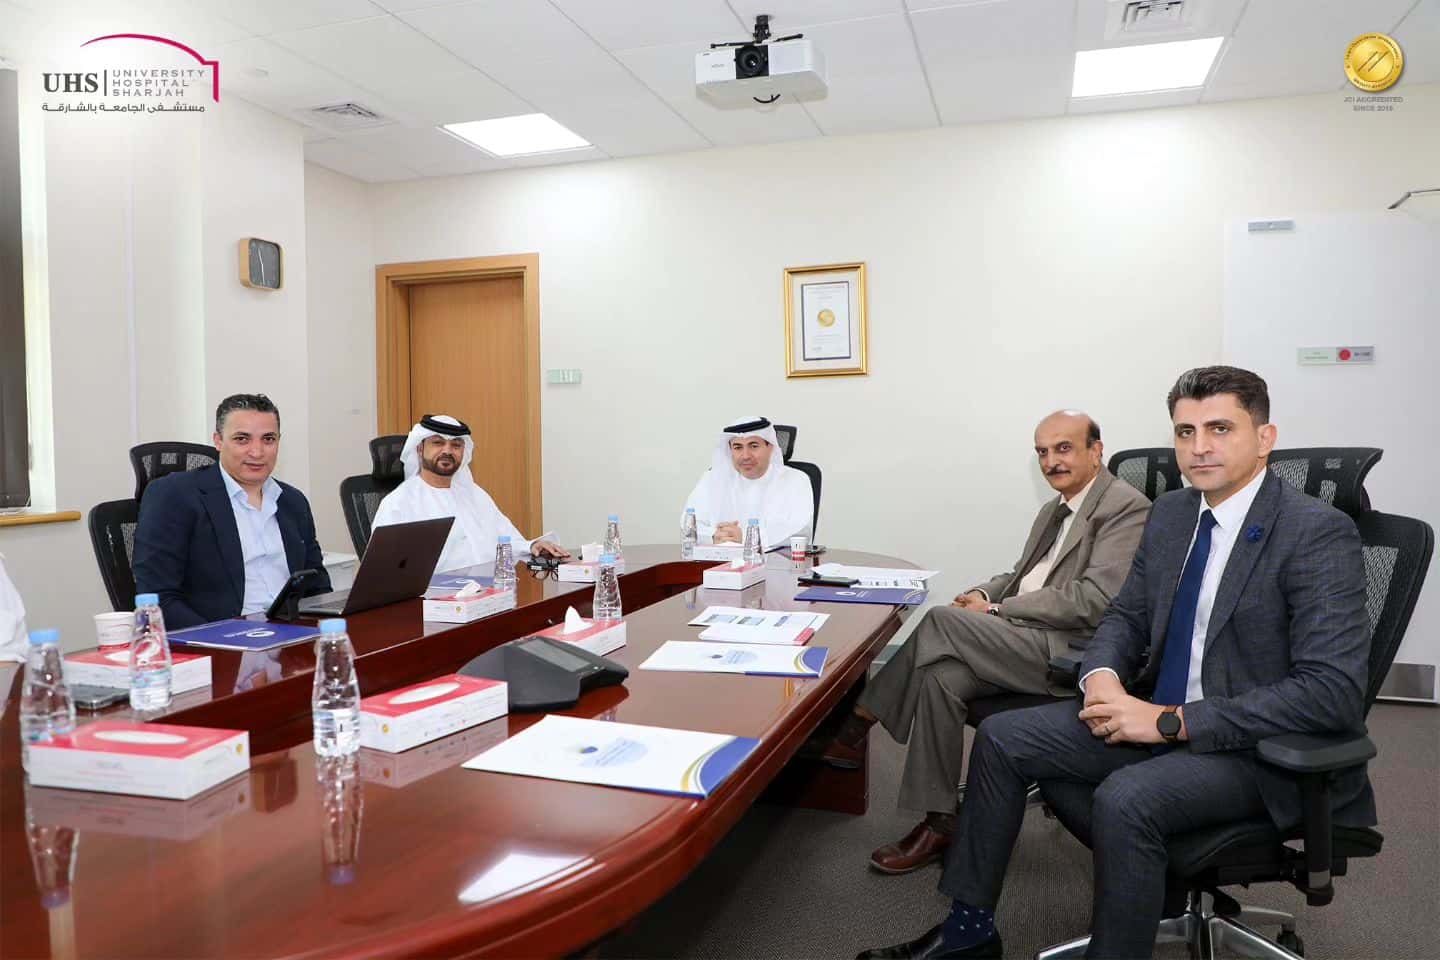  UHS Strategic Partnership with Sharjah Sports Club